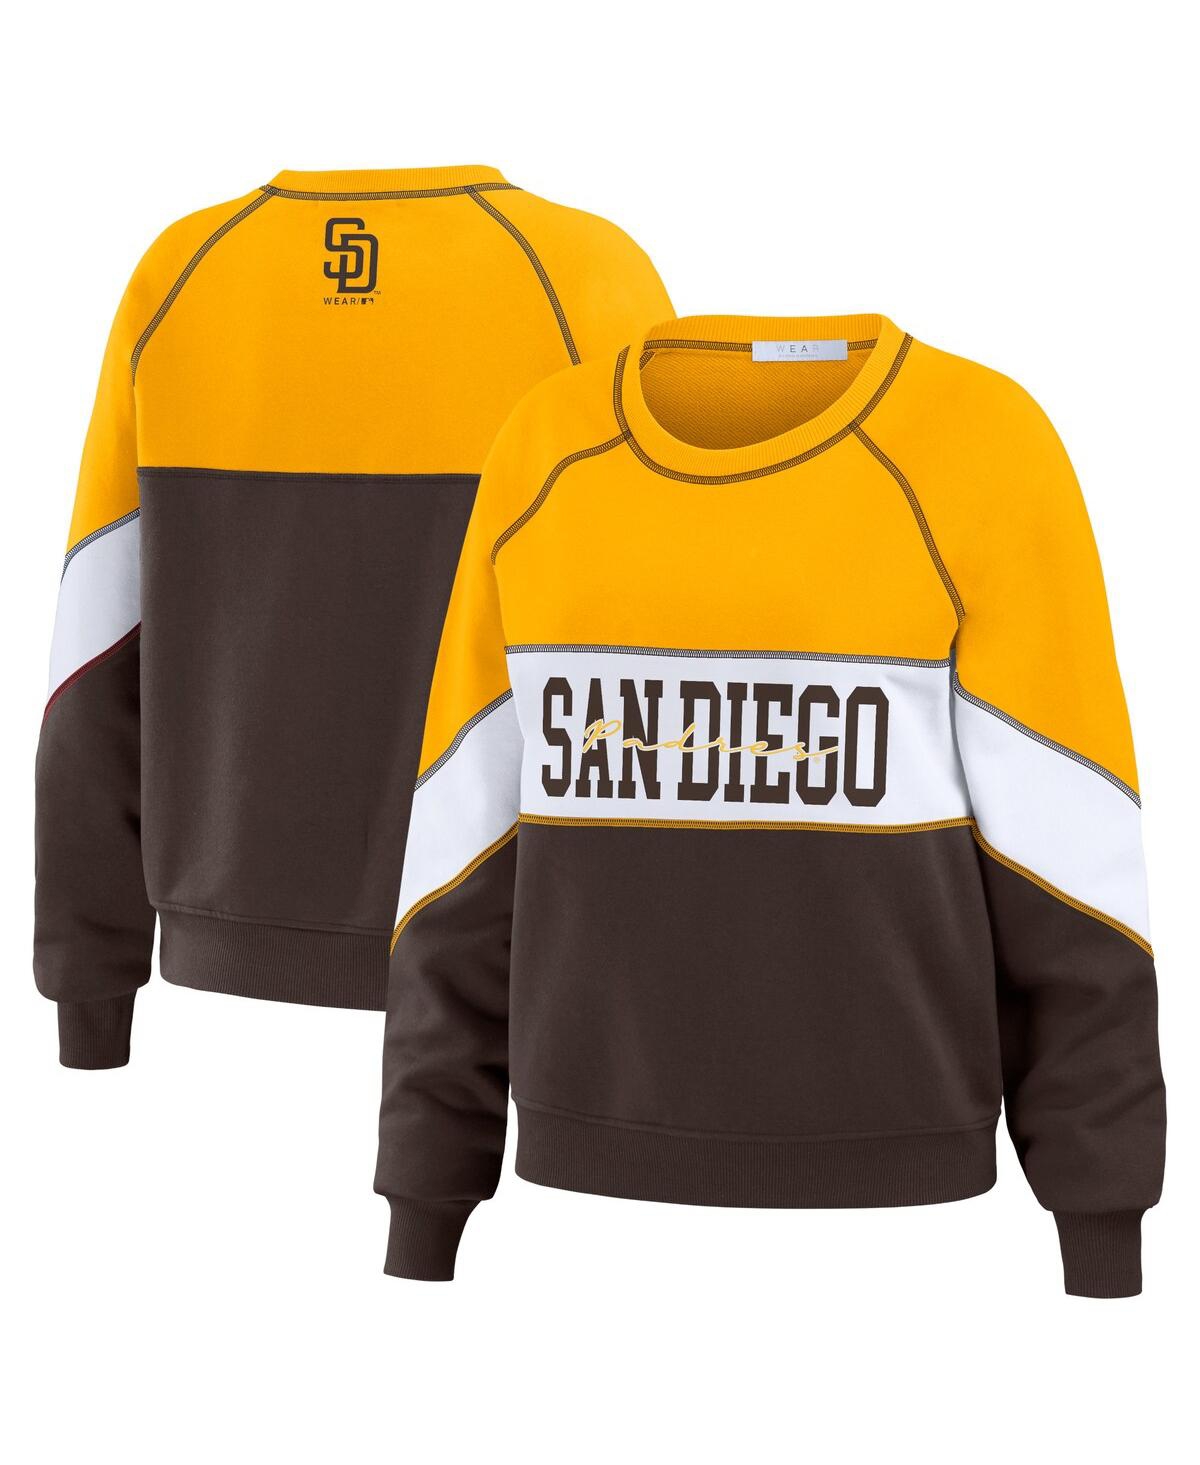 Women's Wear by Erin Andrews Gold, Brown San Diego Padres Crewneck Pullover Sweatshirt - Gold, Brown